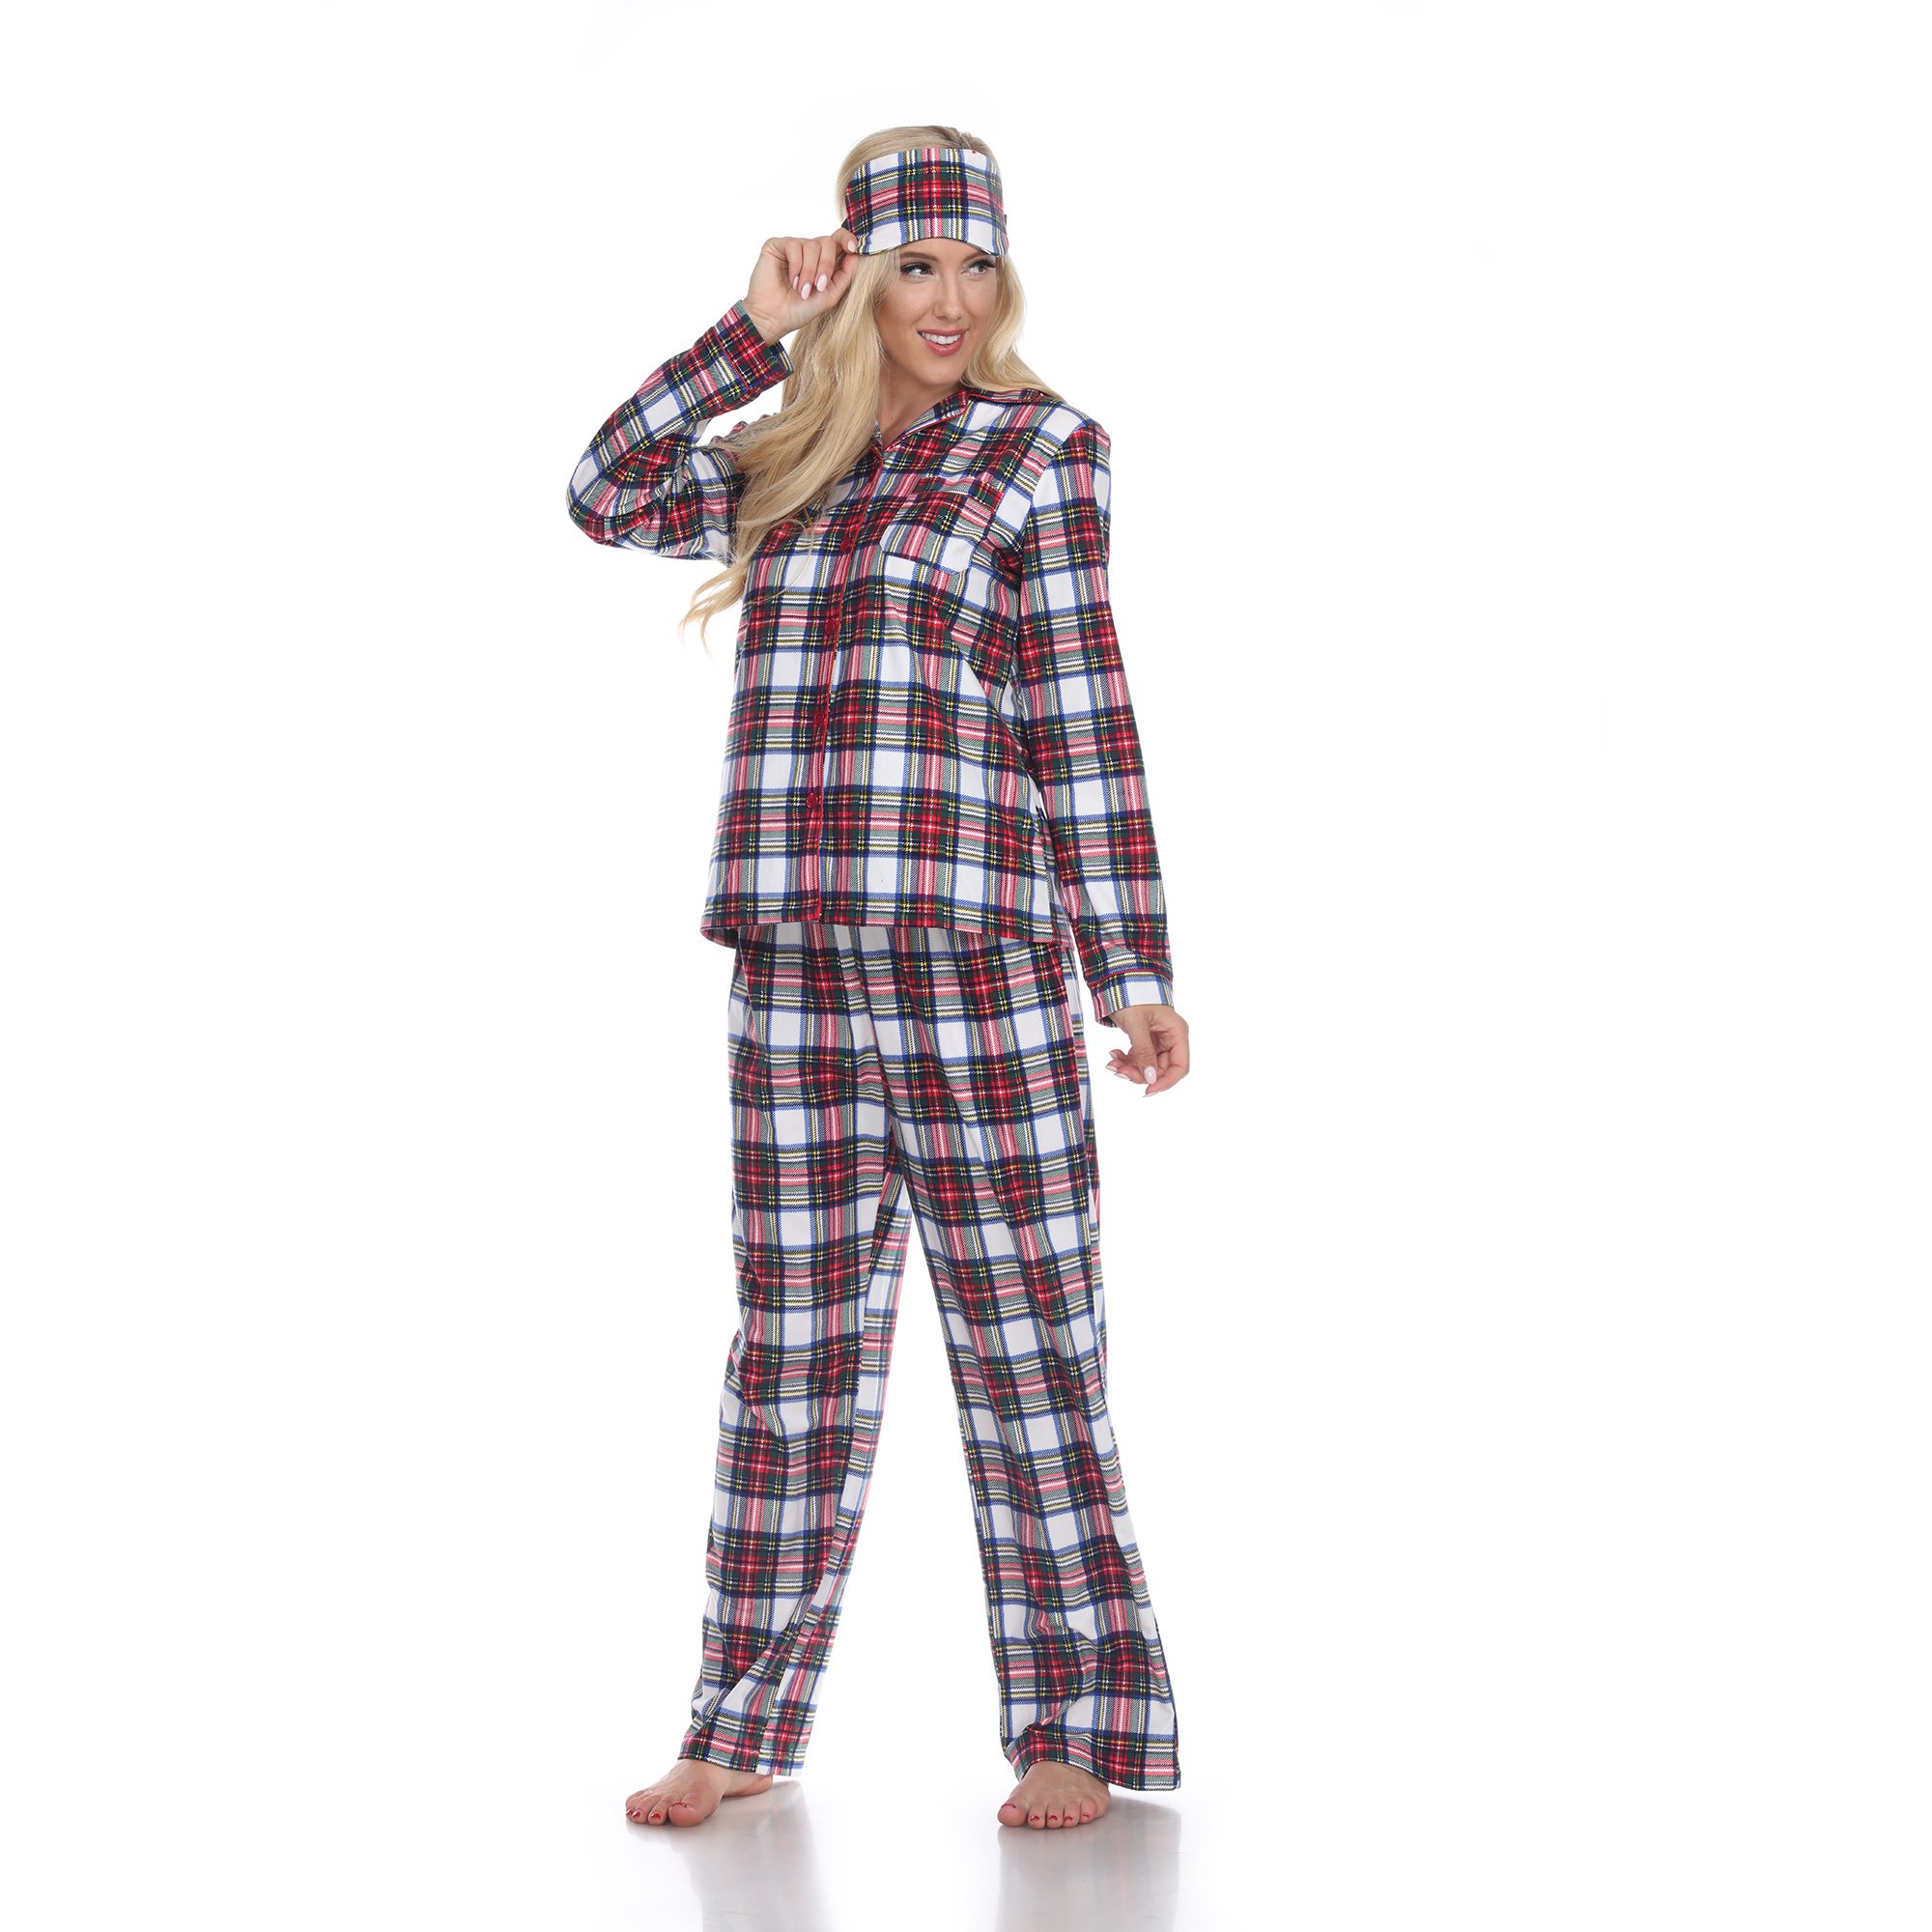 White Mark Women's Three-Piece Pajama Set - Pink Plaid, 3X